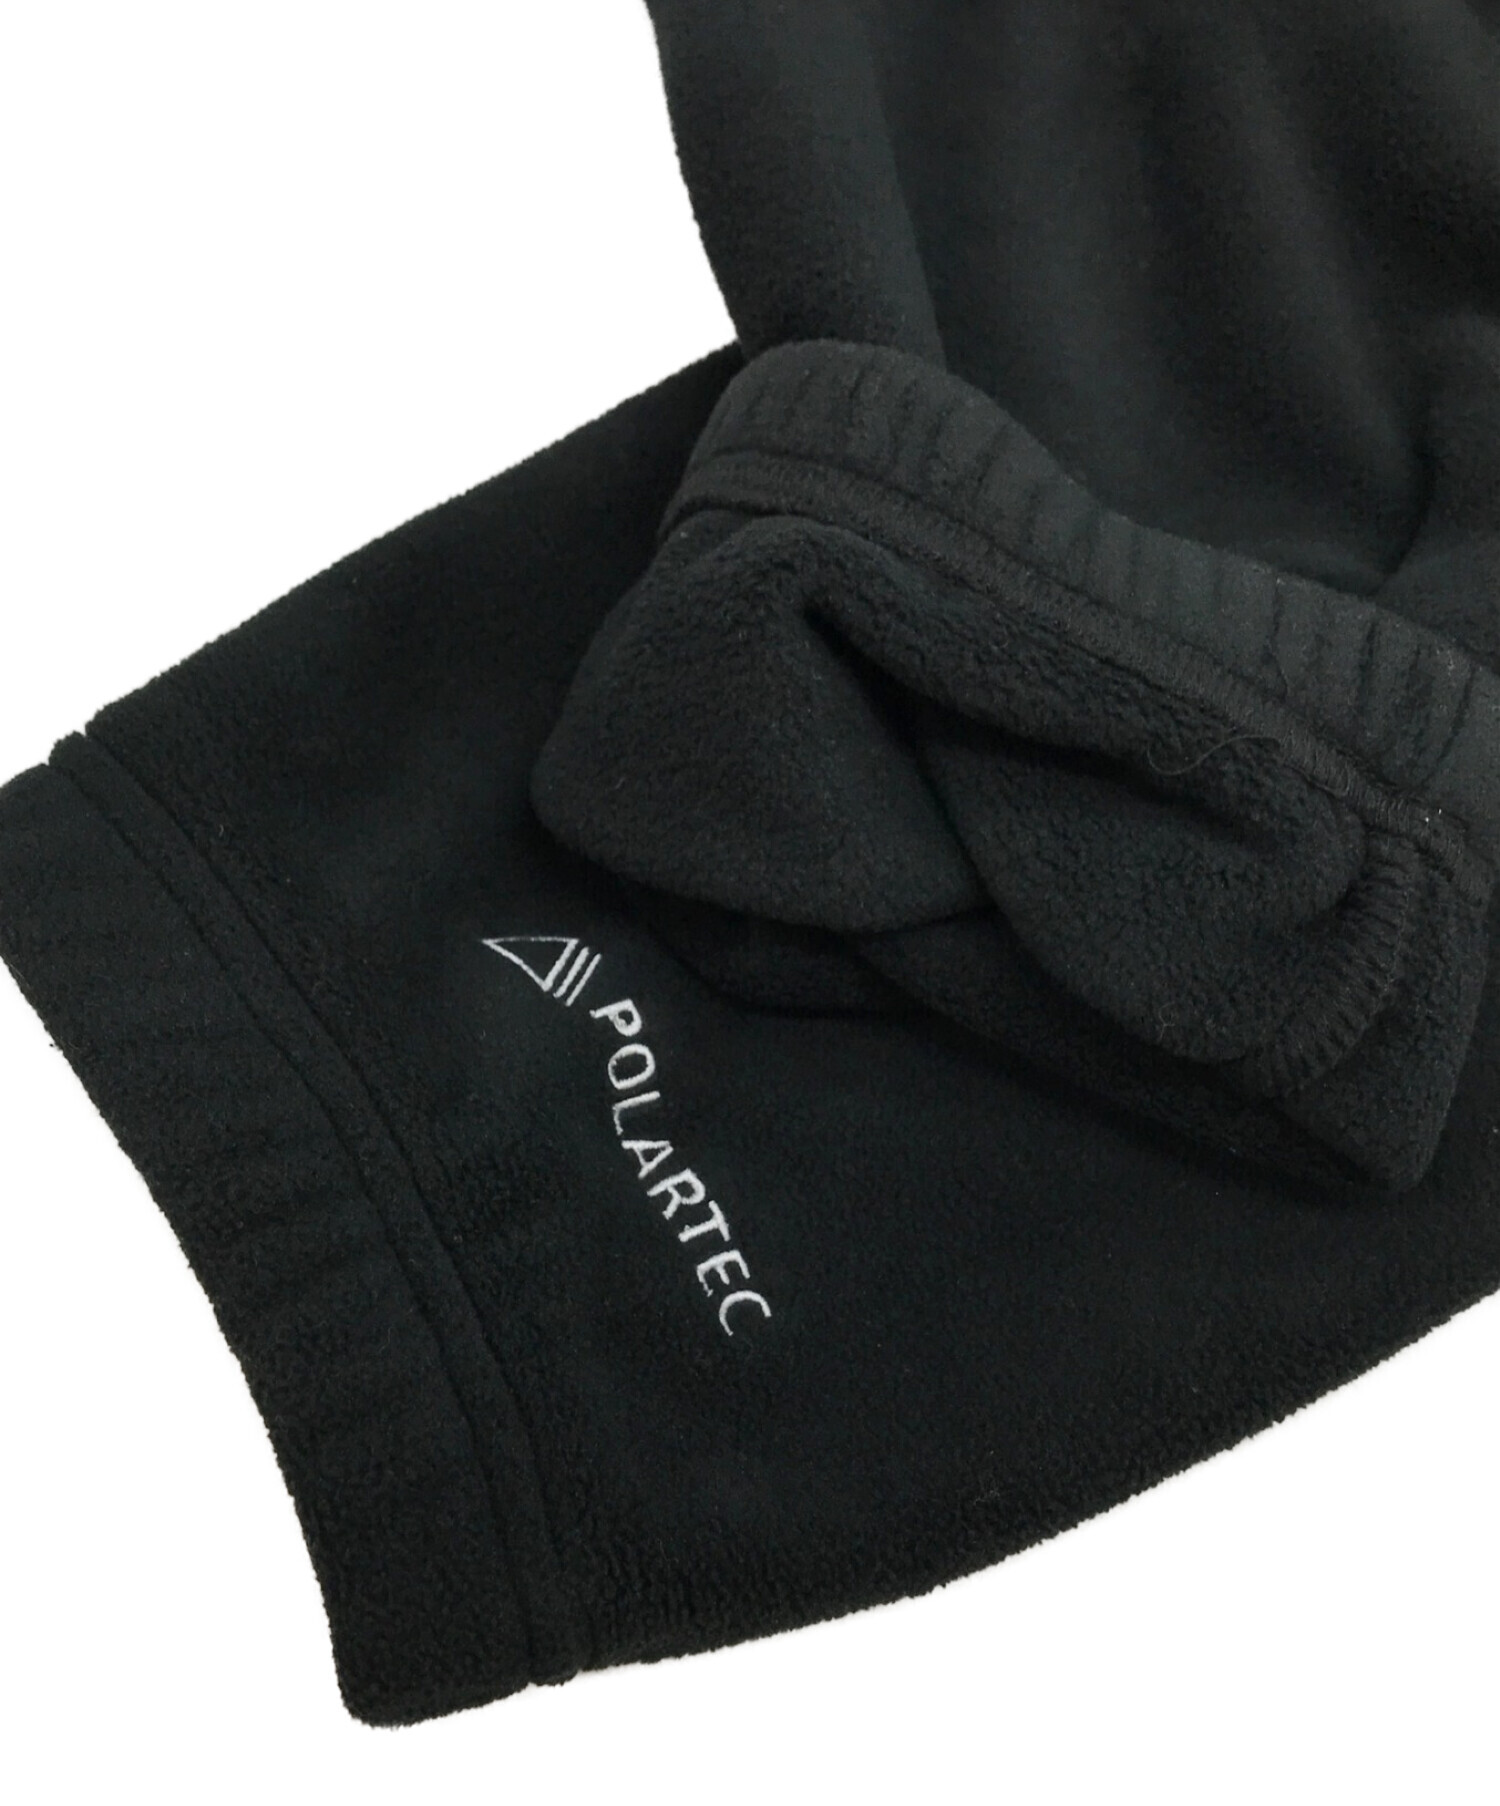 Supreme (シュプリーム) polartec zip jacket/ポーラテックジップジャケット ブラック サイズ:SIZE XL